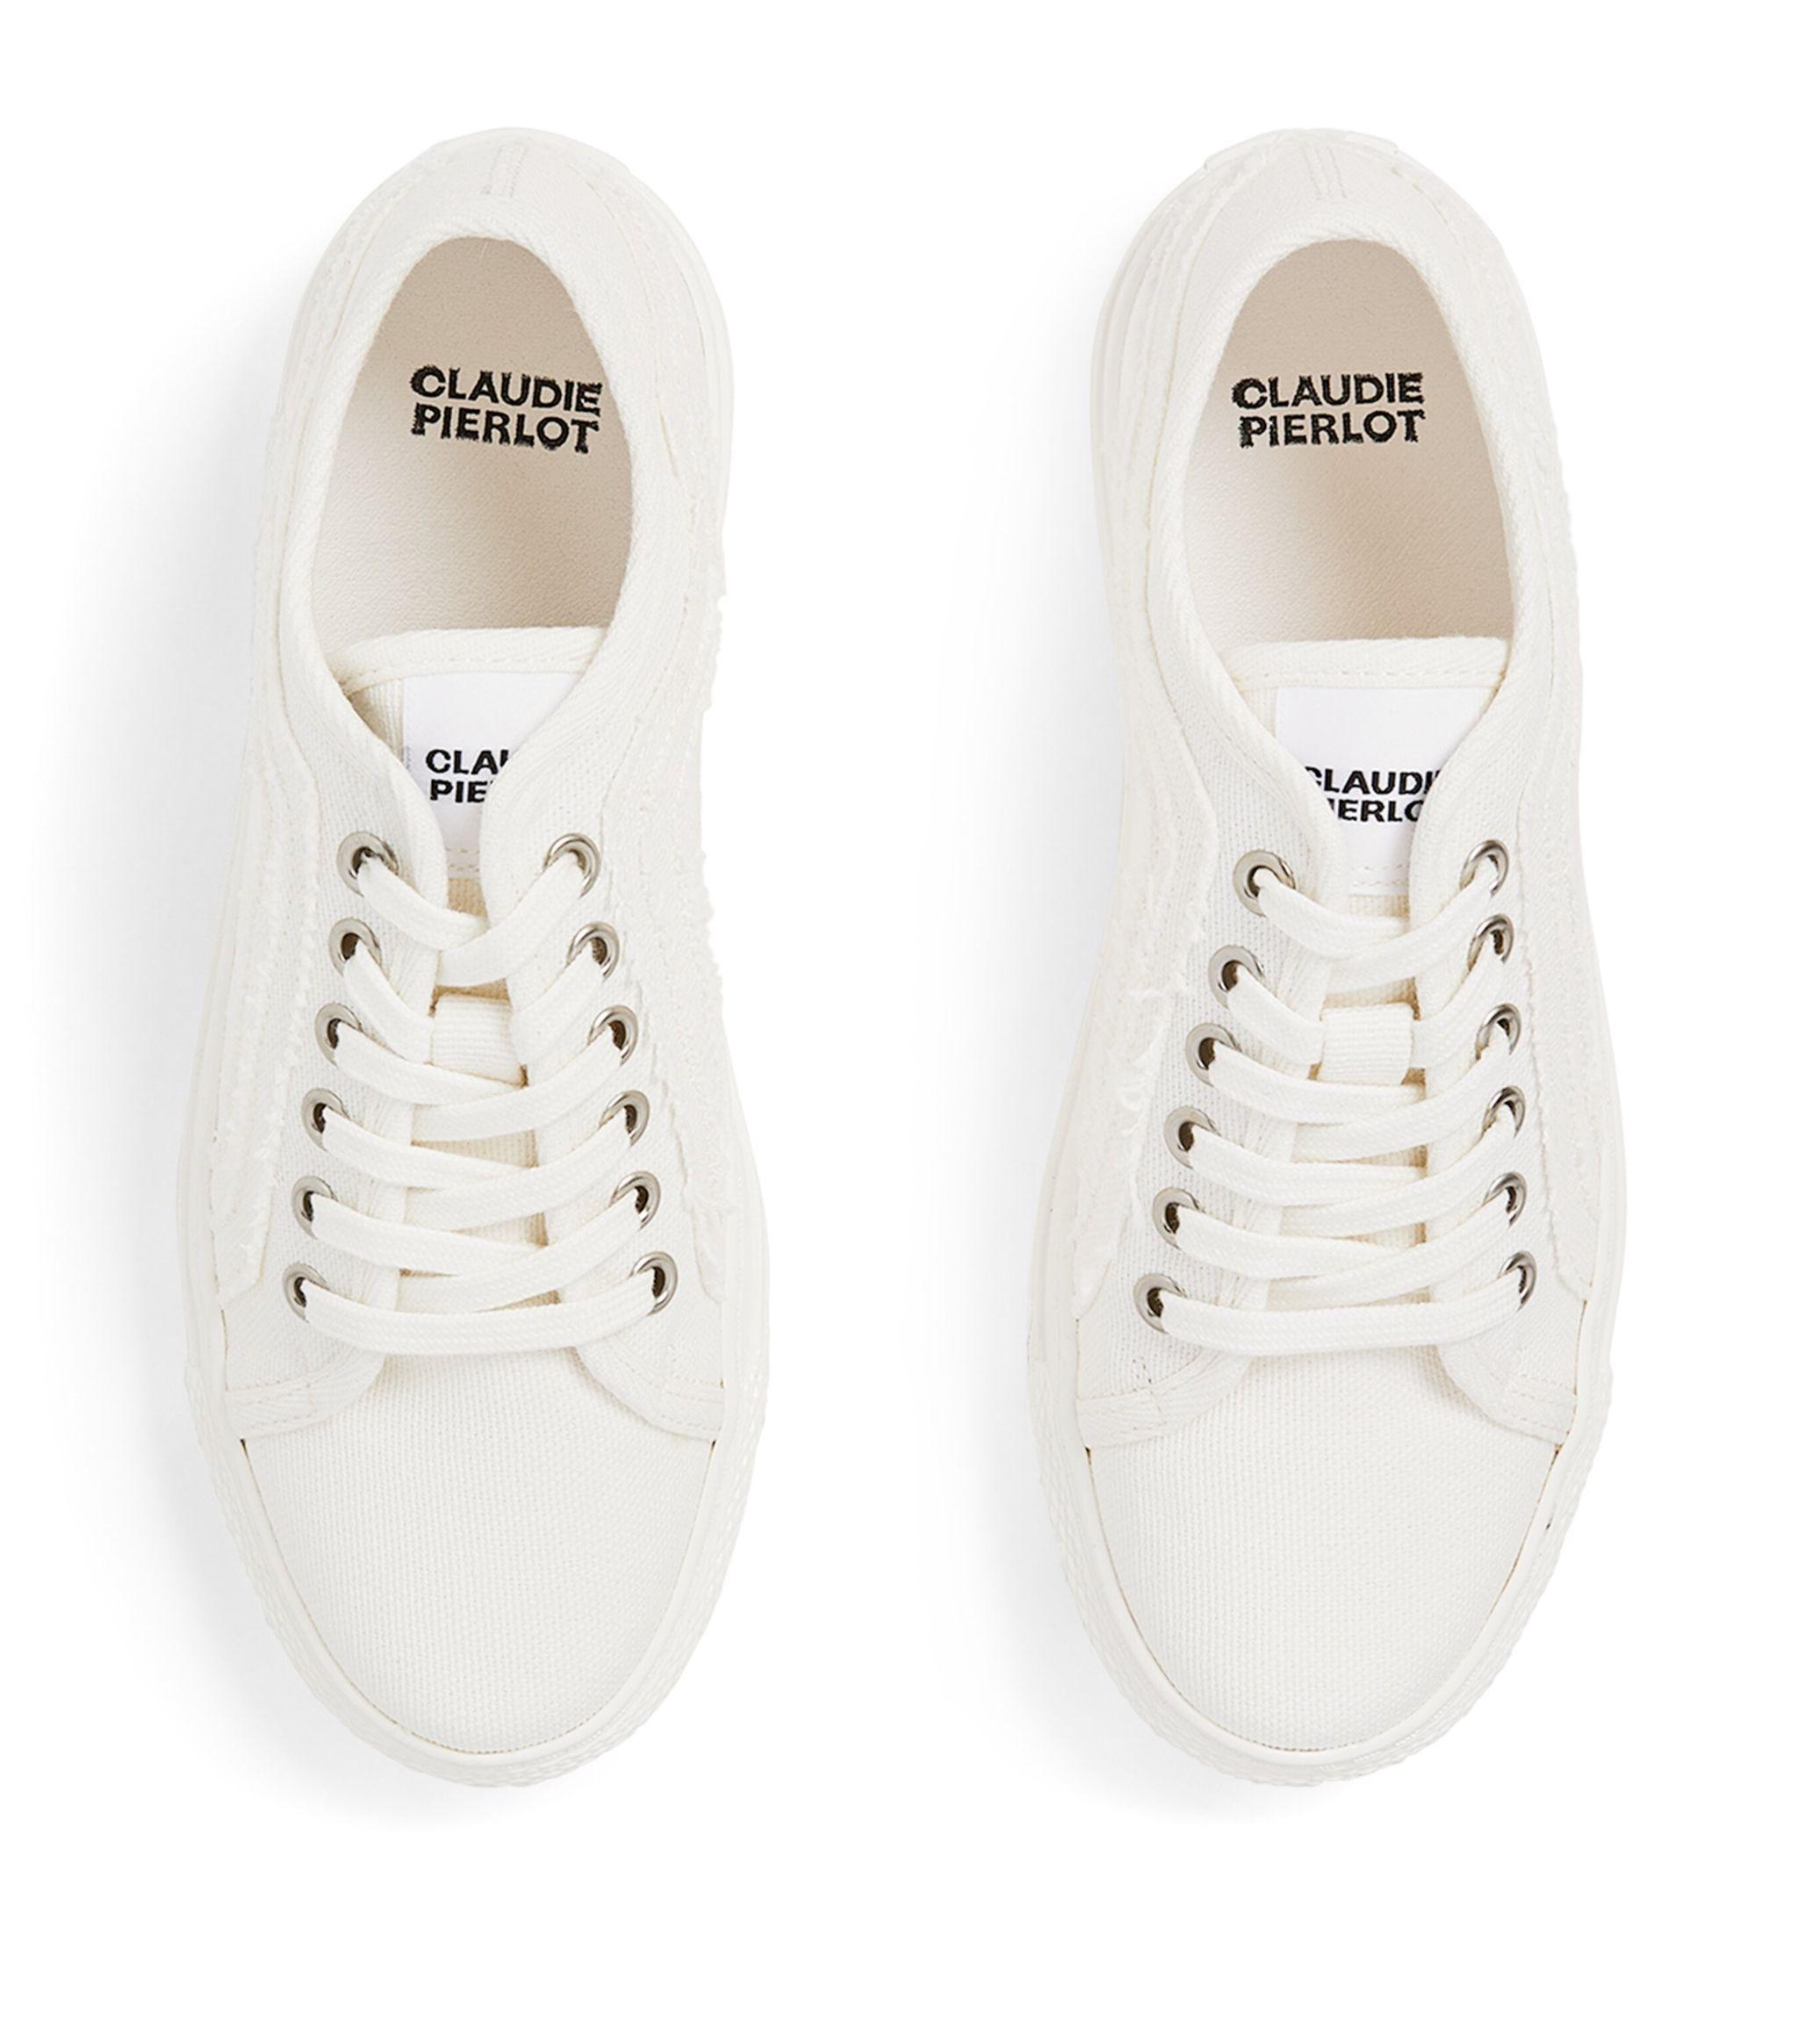 Claudie Pierlot Canvas Sneakers in White | Lyst